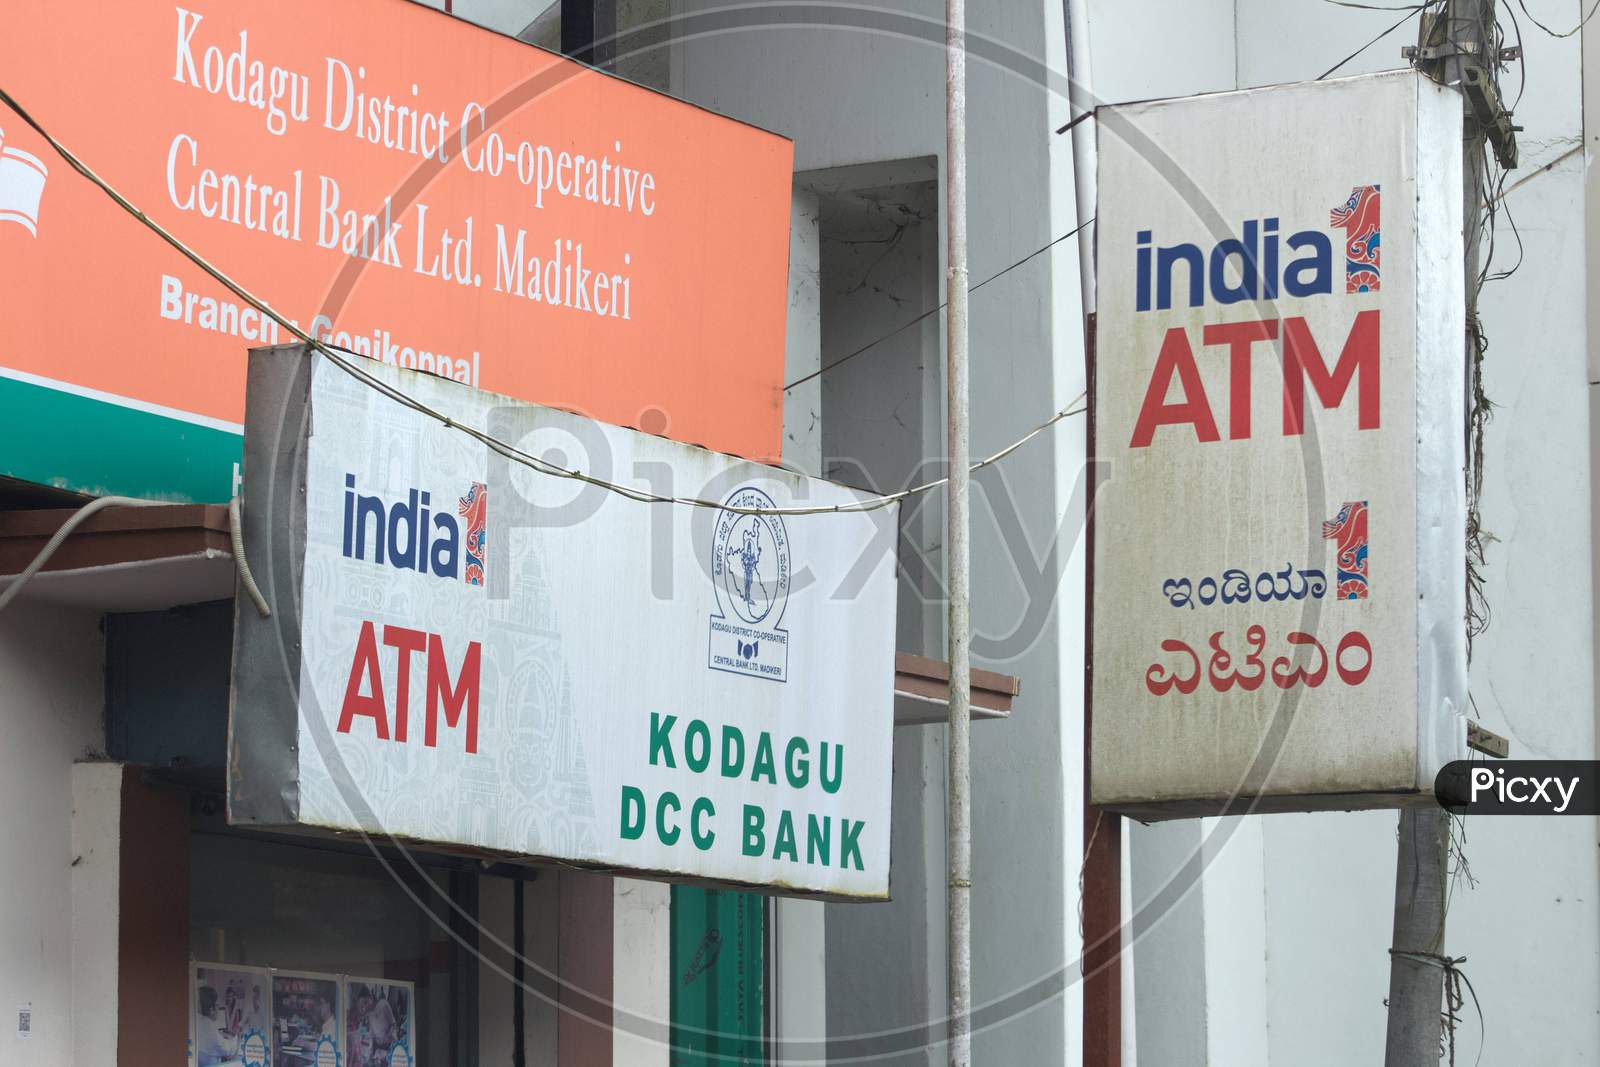 kodagu cooperative bank and India 1 atm in kodagu district.